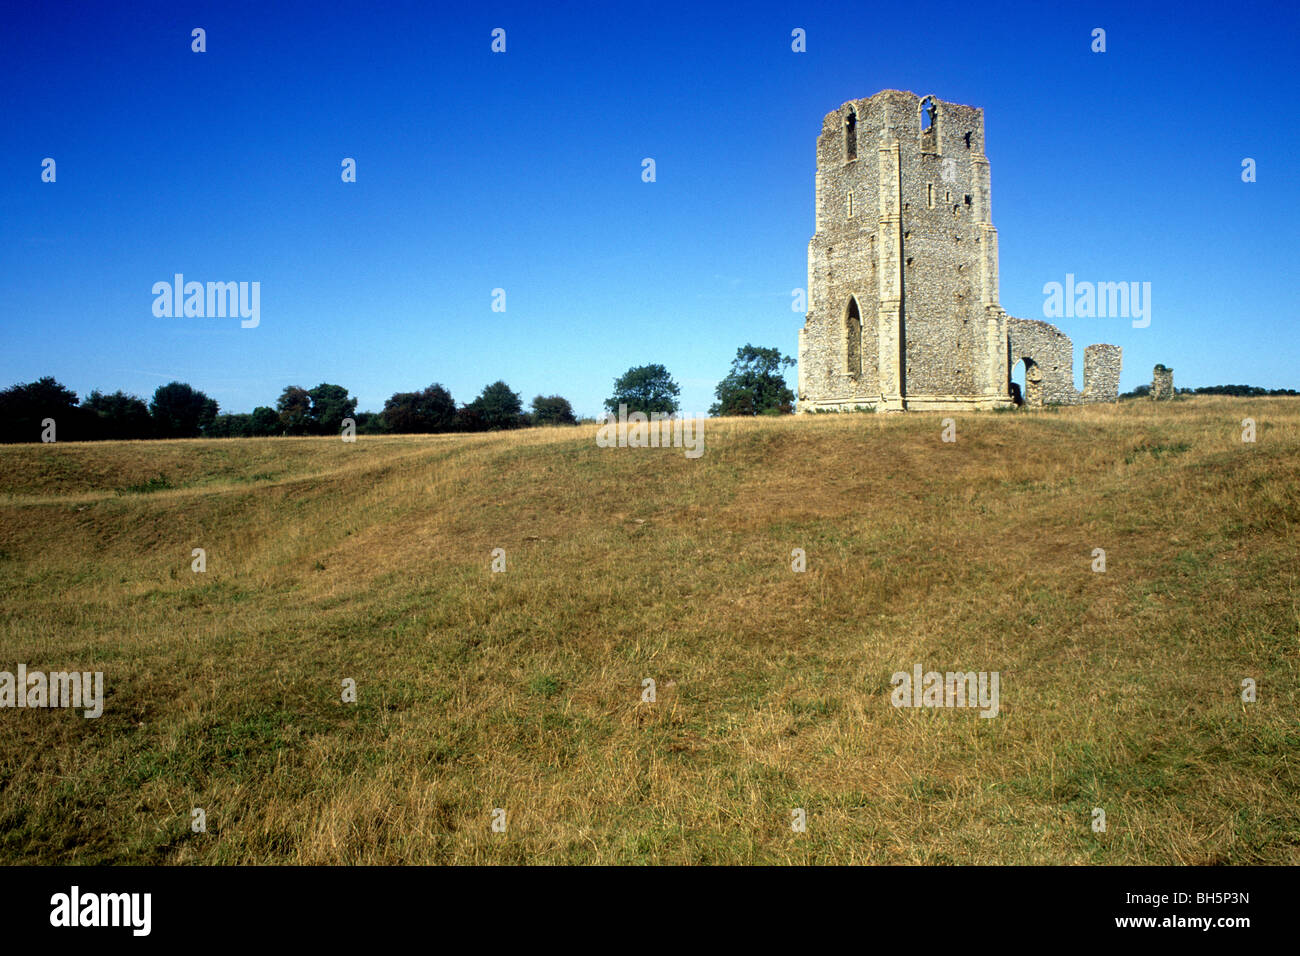 Egmere, Norfolk. Verloren, verlassene mittelalterliche Dorf, Ruinen Kirche englische Dörfer zerstörte East Anglia England UK Turm Kirchen Stockfoto